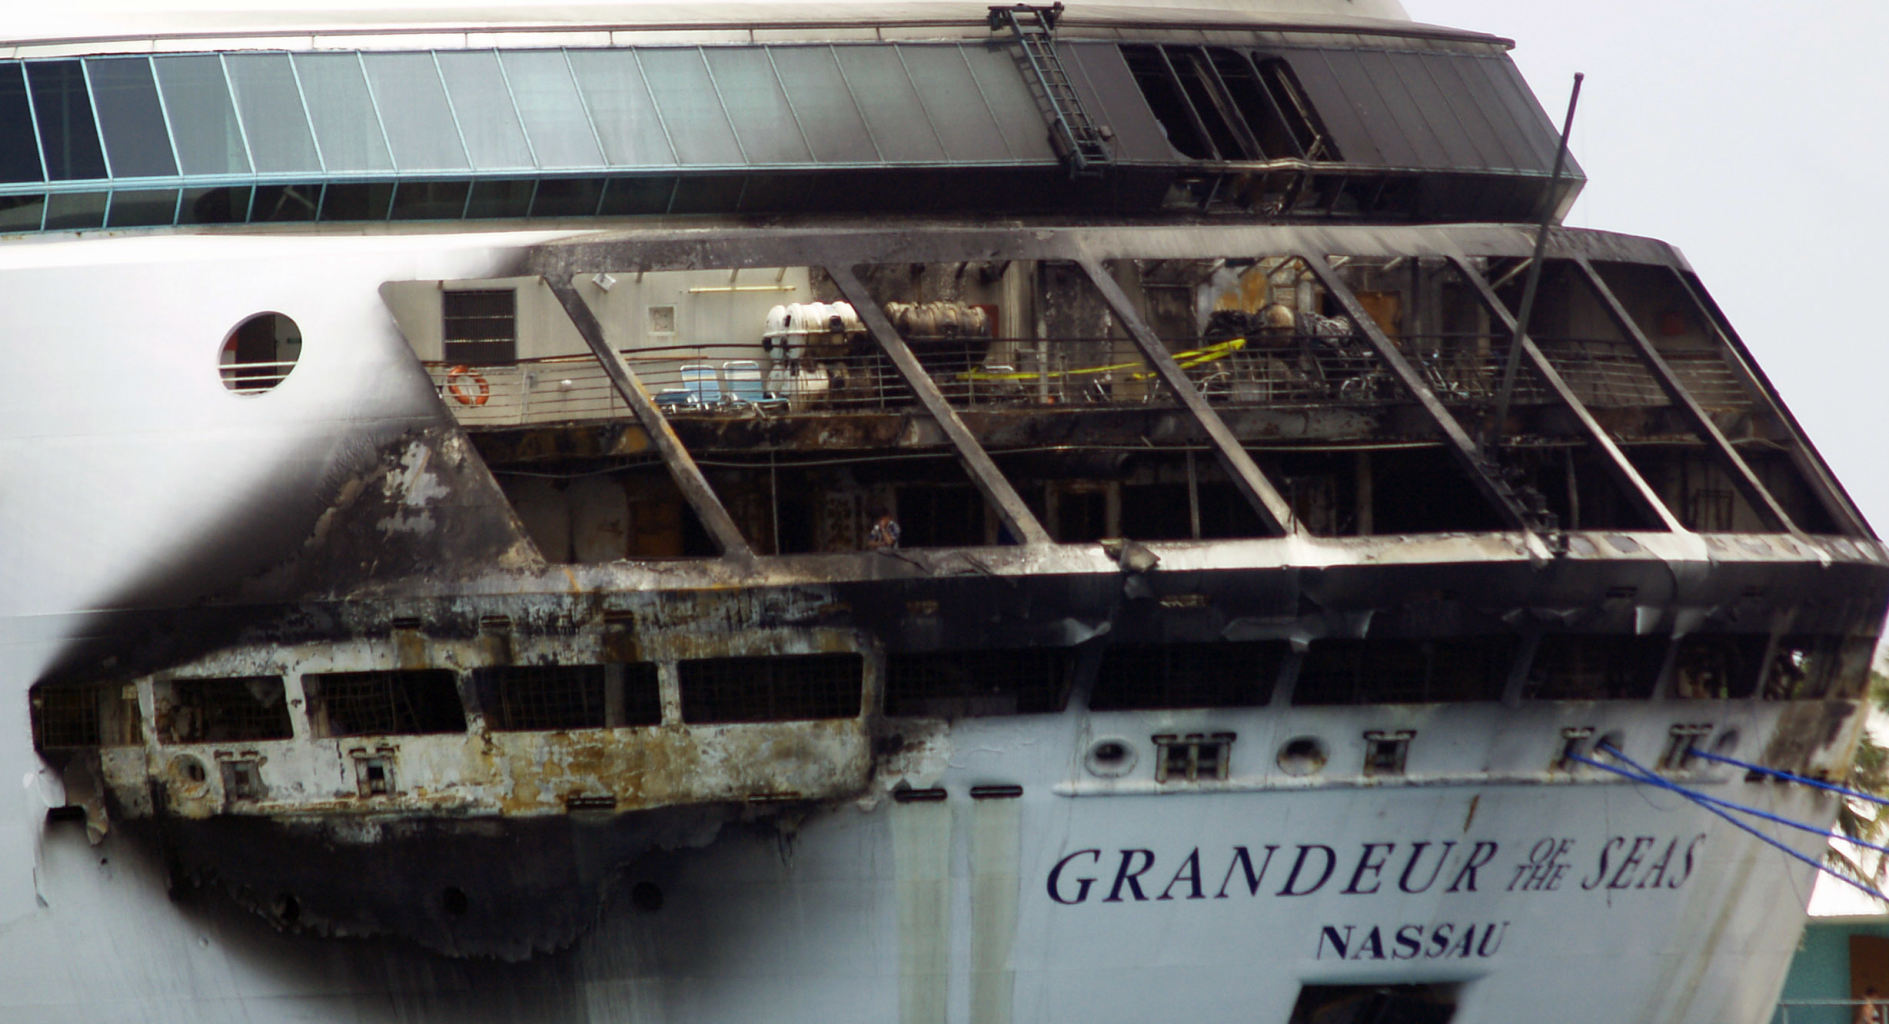 Fire breaks out aboard Royal Caribbean cruise ship